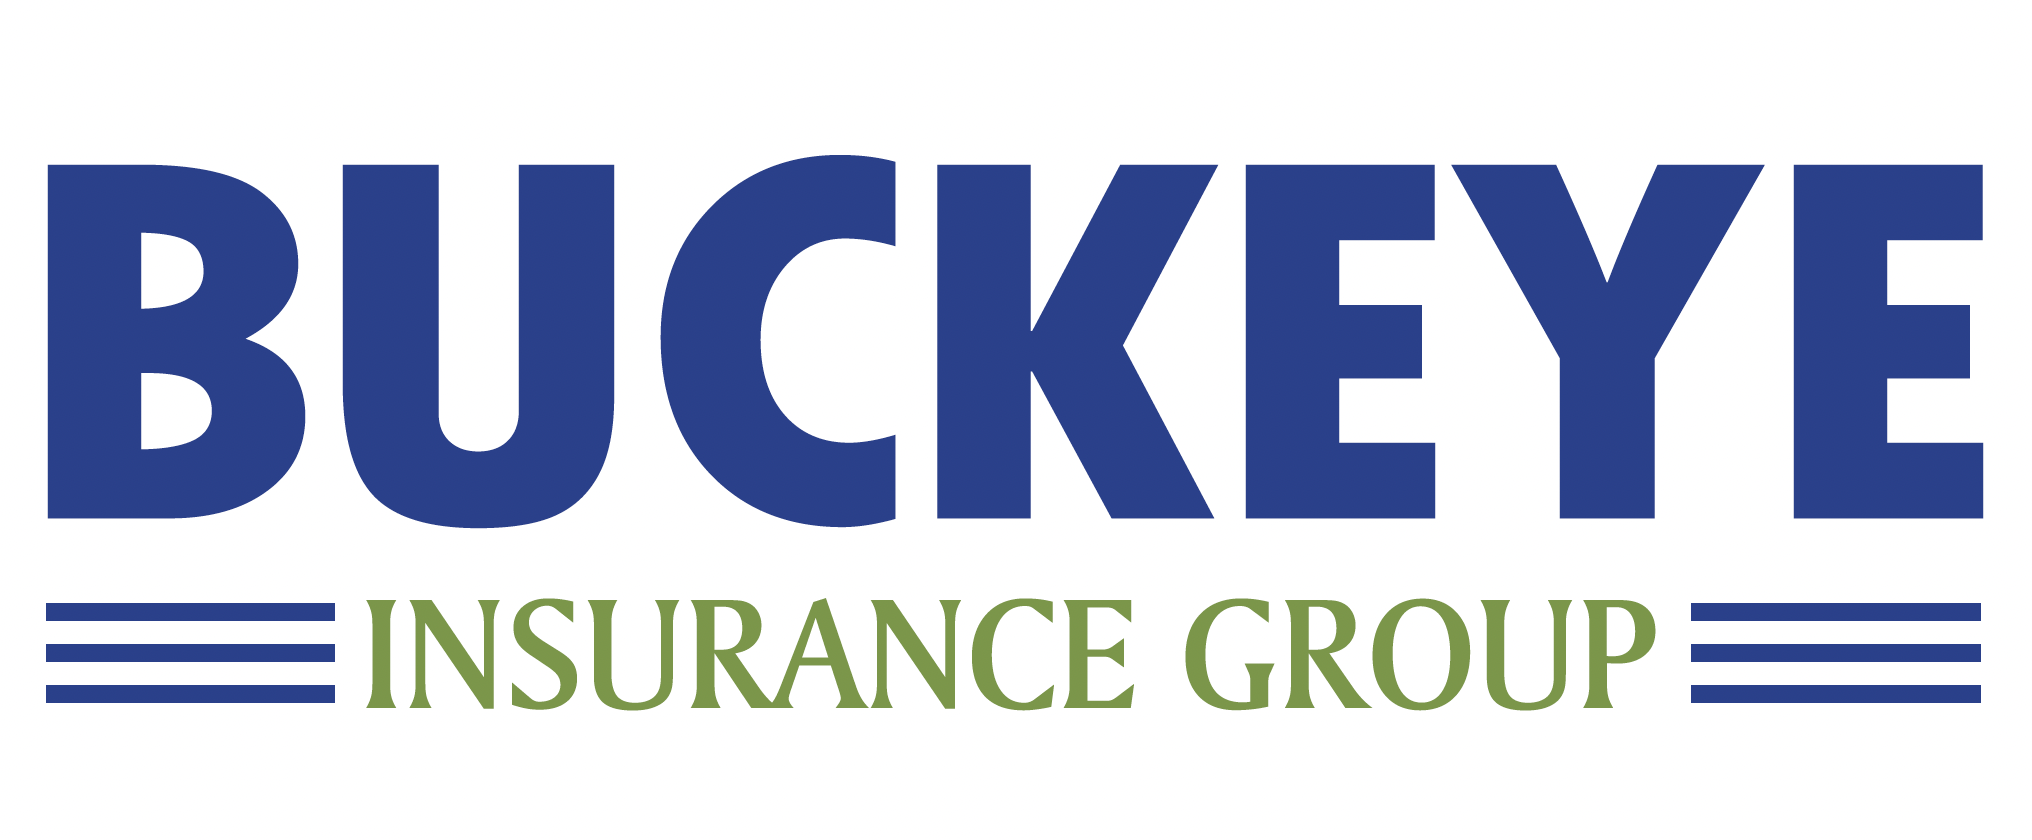 Buckeye Insurance Group log